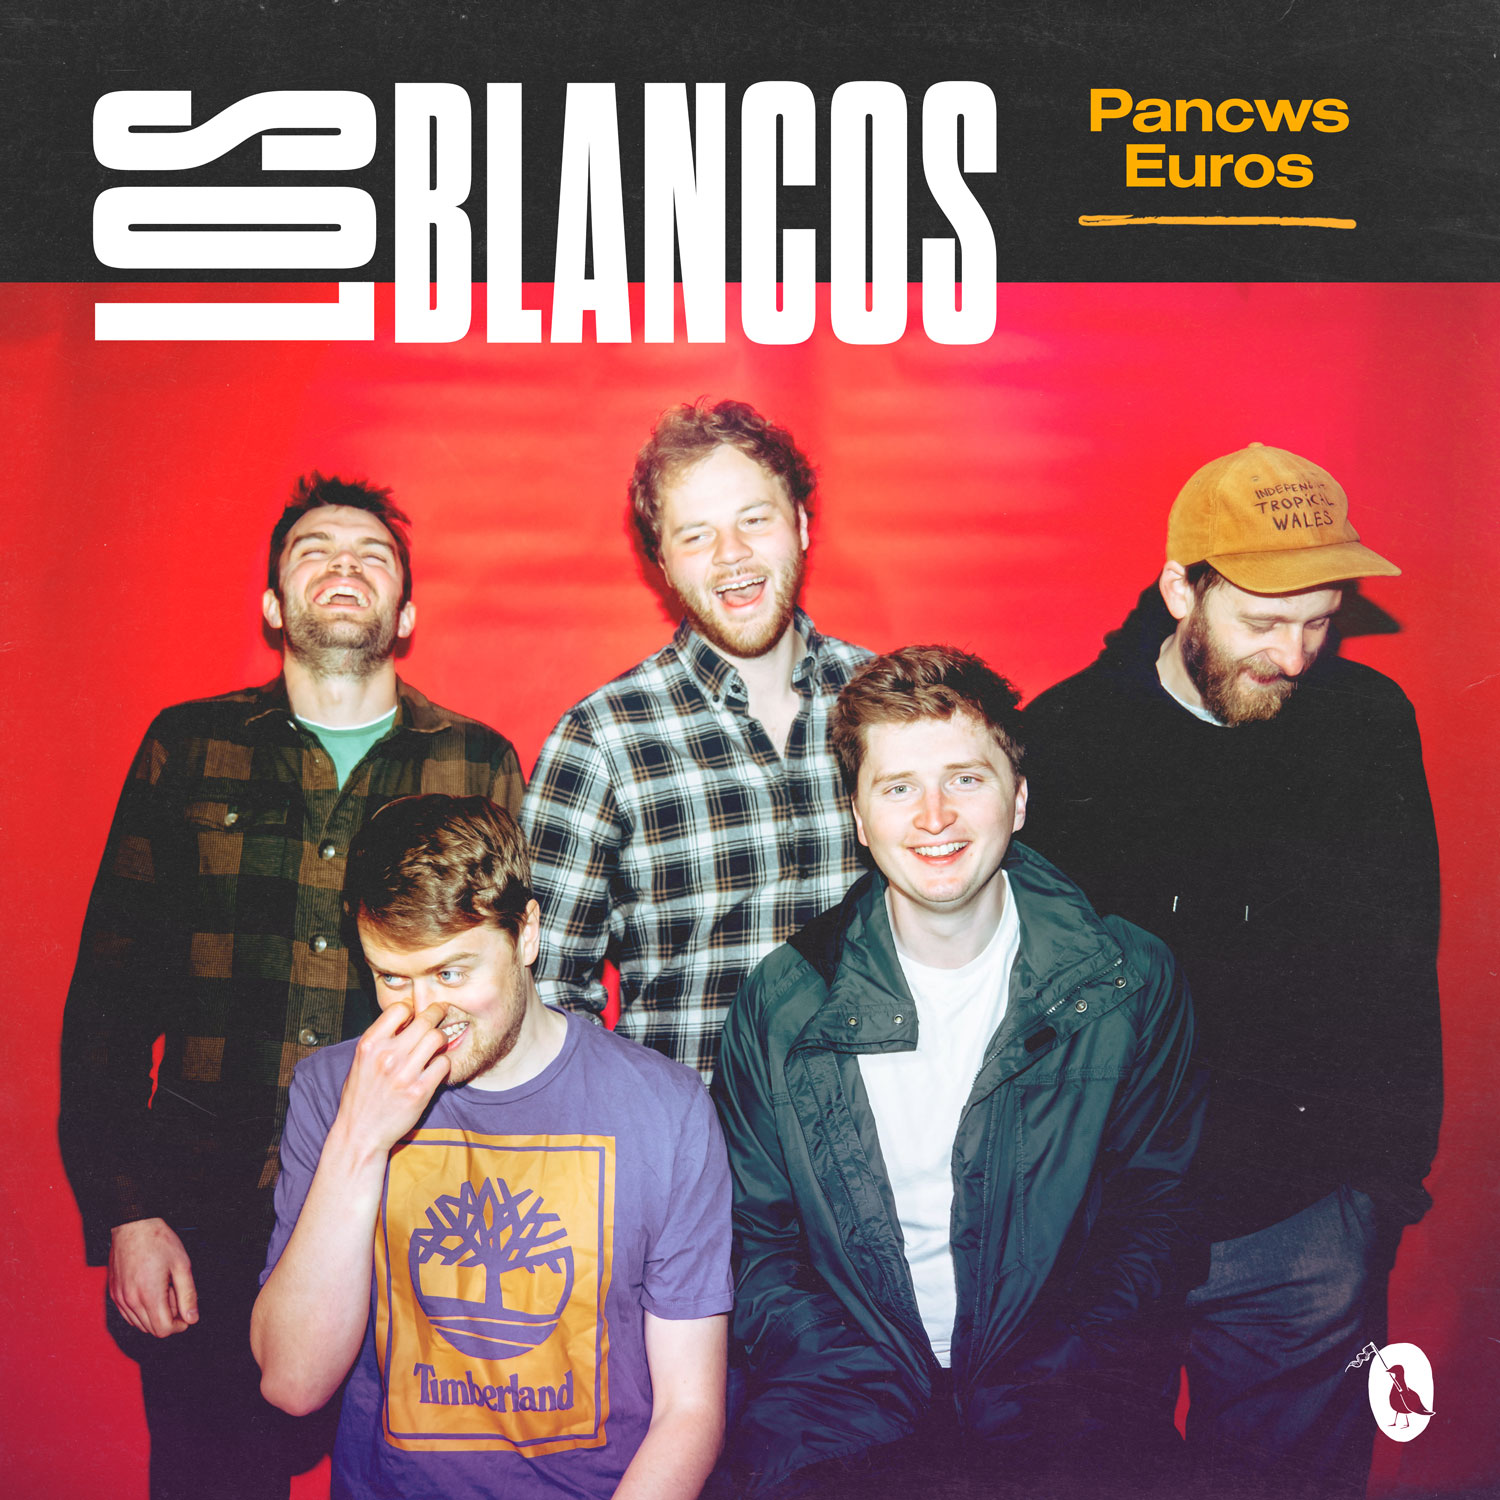 LISTEN: “Pancws Euros” by Los Blancos